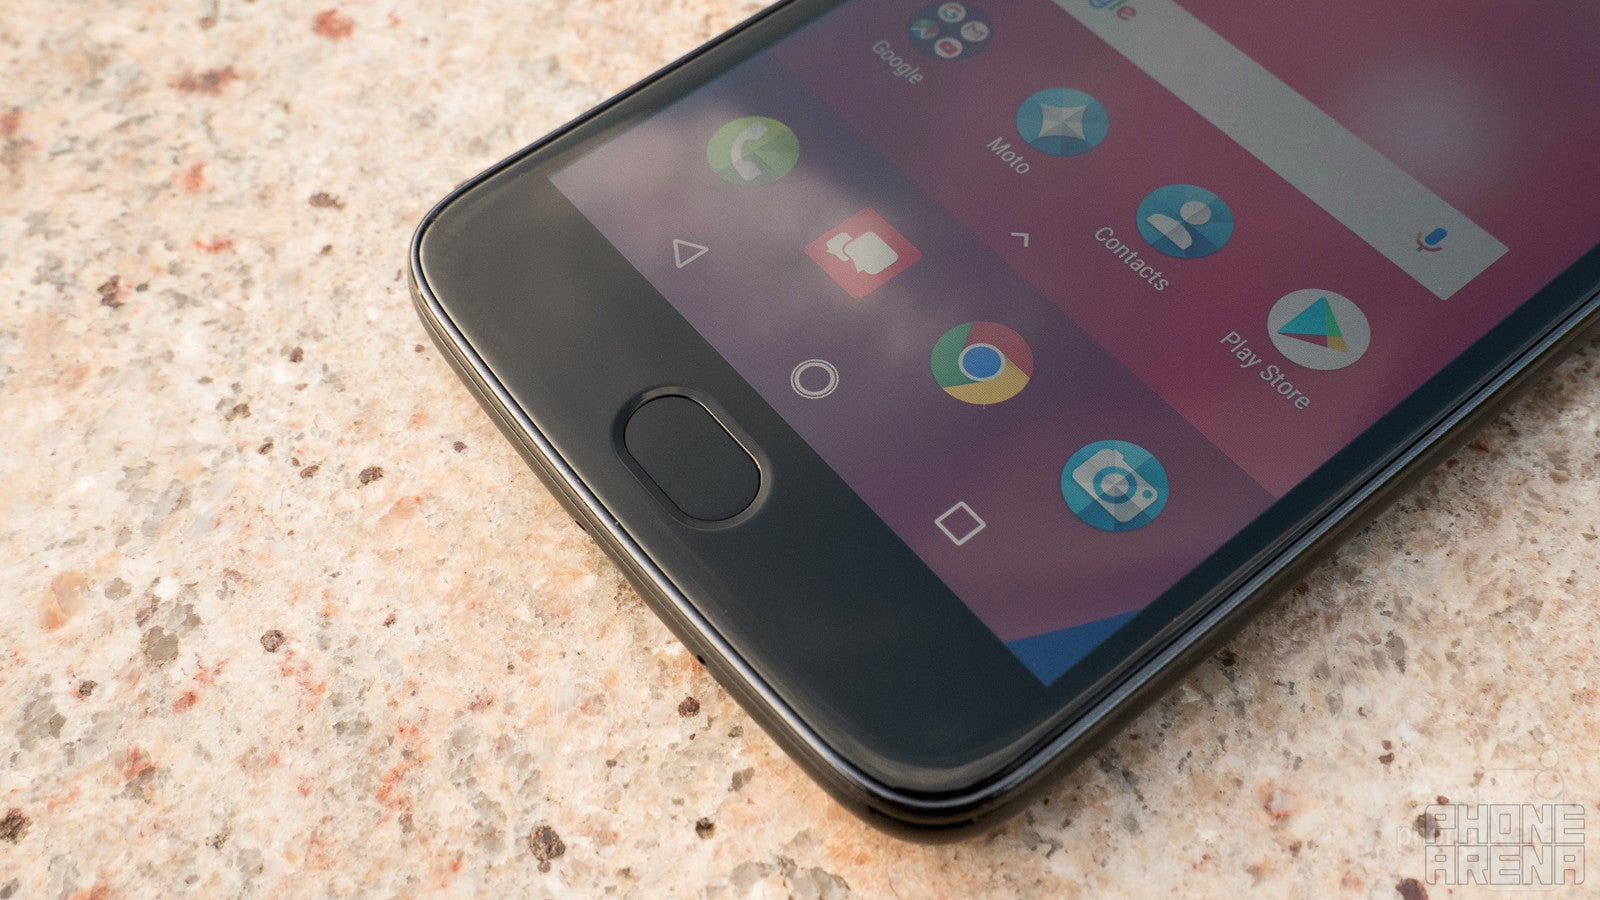 Motorola Moto E4 Review